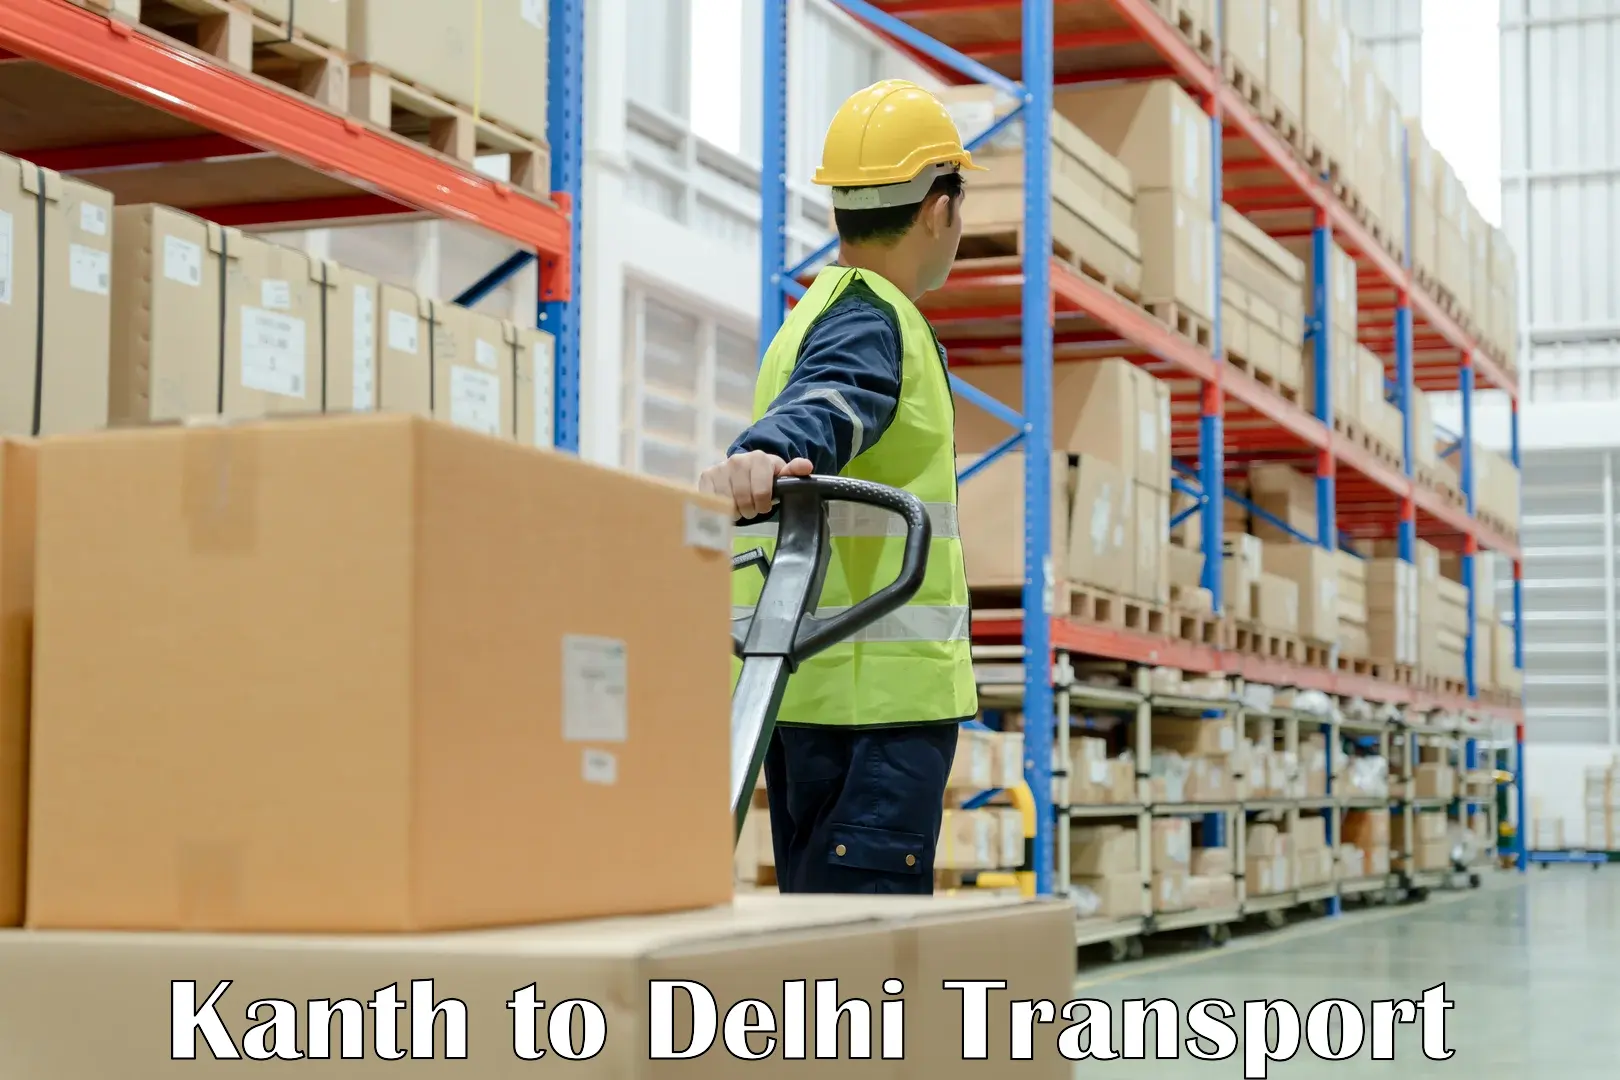 Shipping partner Kanth to University of Delhi